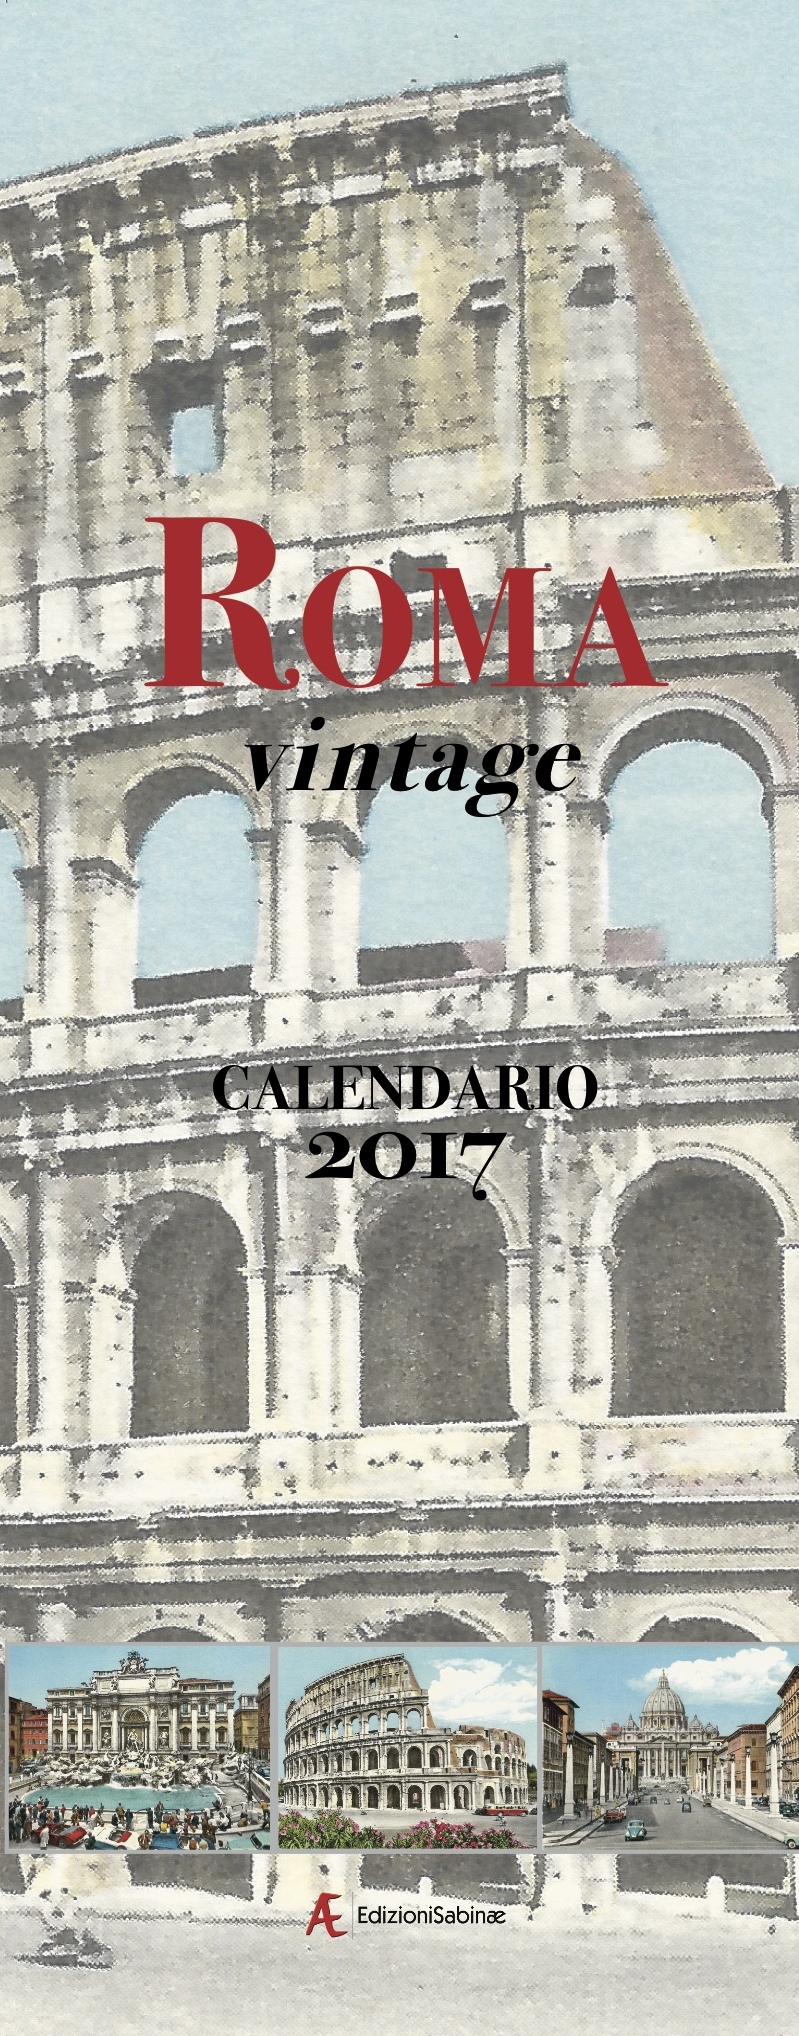 Calendario_RomaVintage21cover